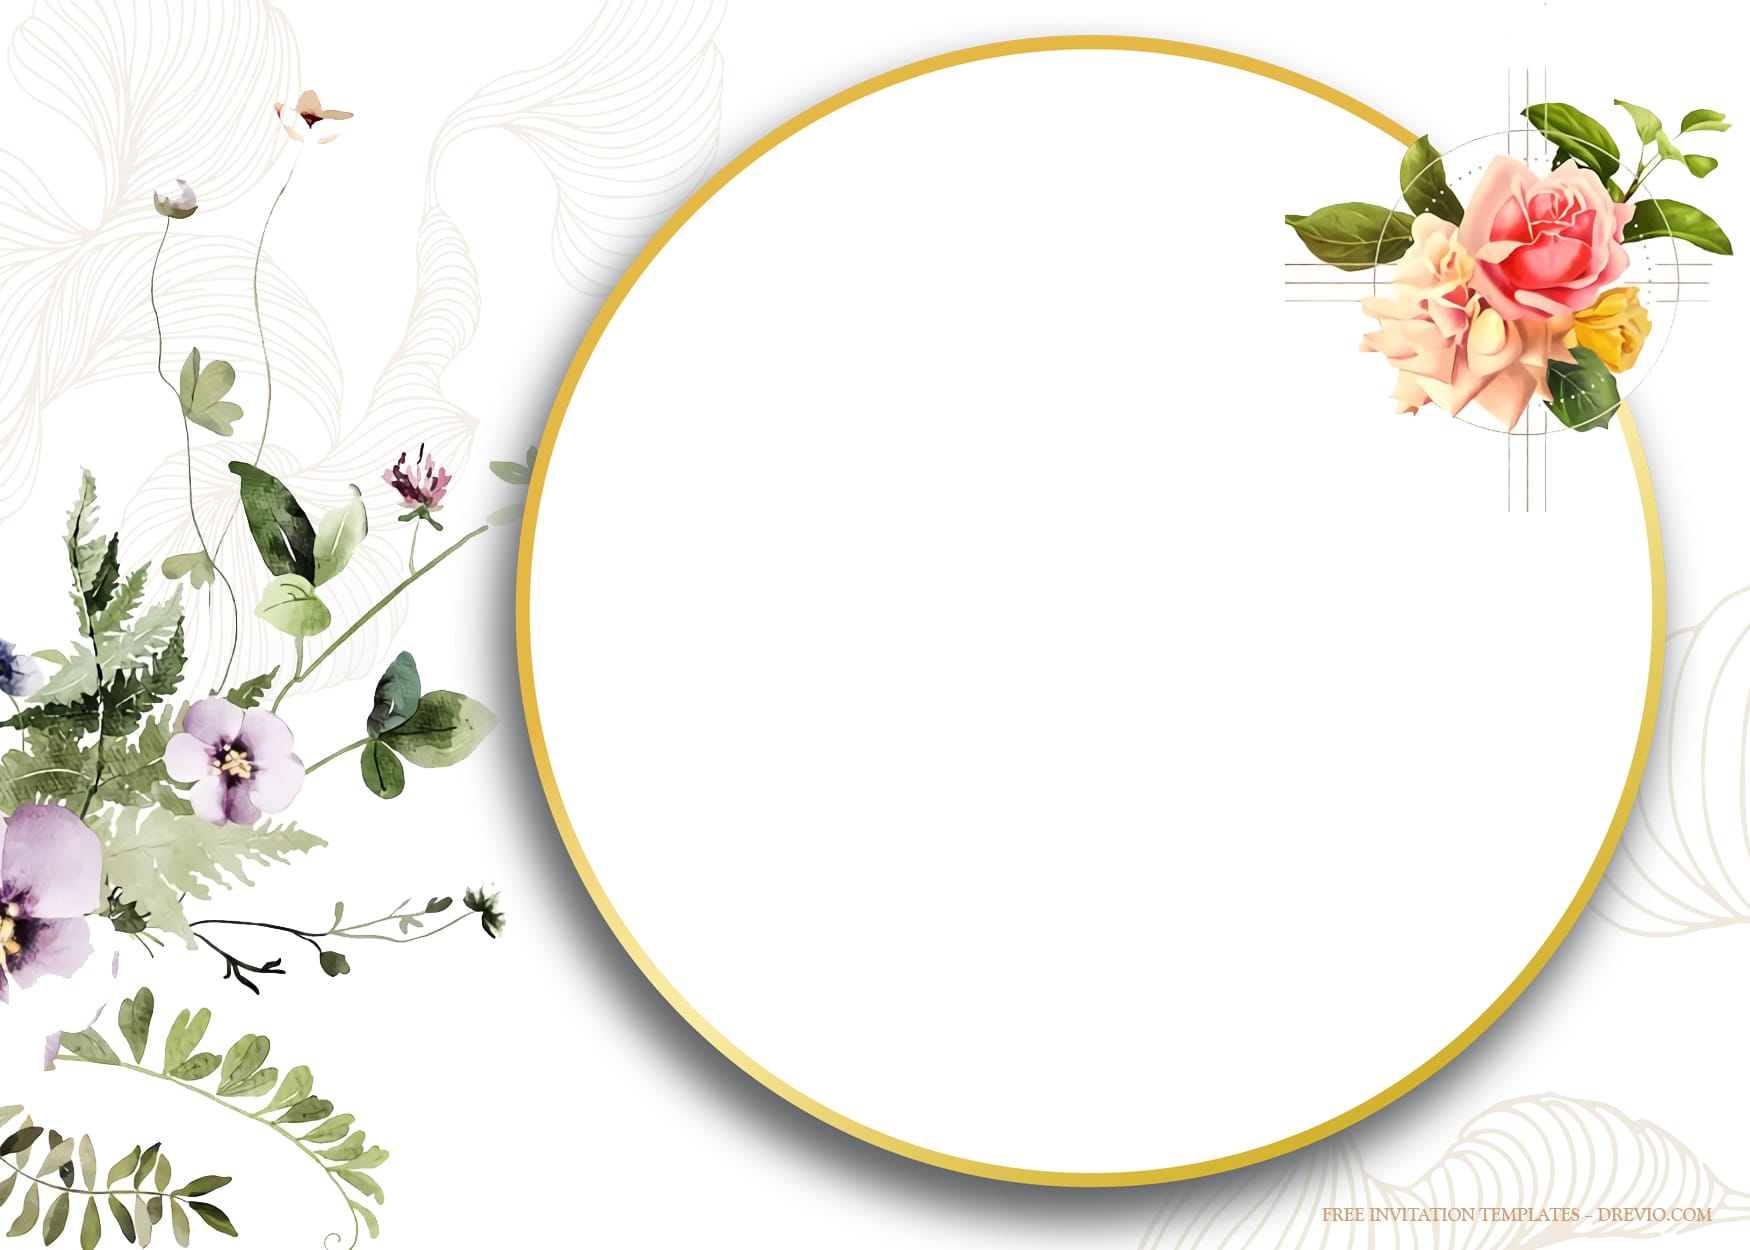 7+ Midsummer Wildflowers Garden Wedding Invitation Templates Type One